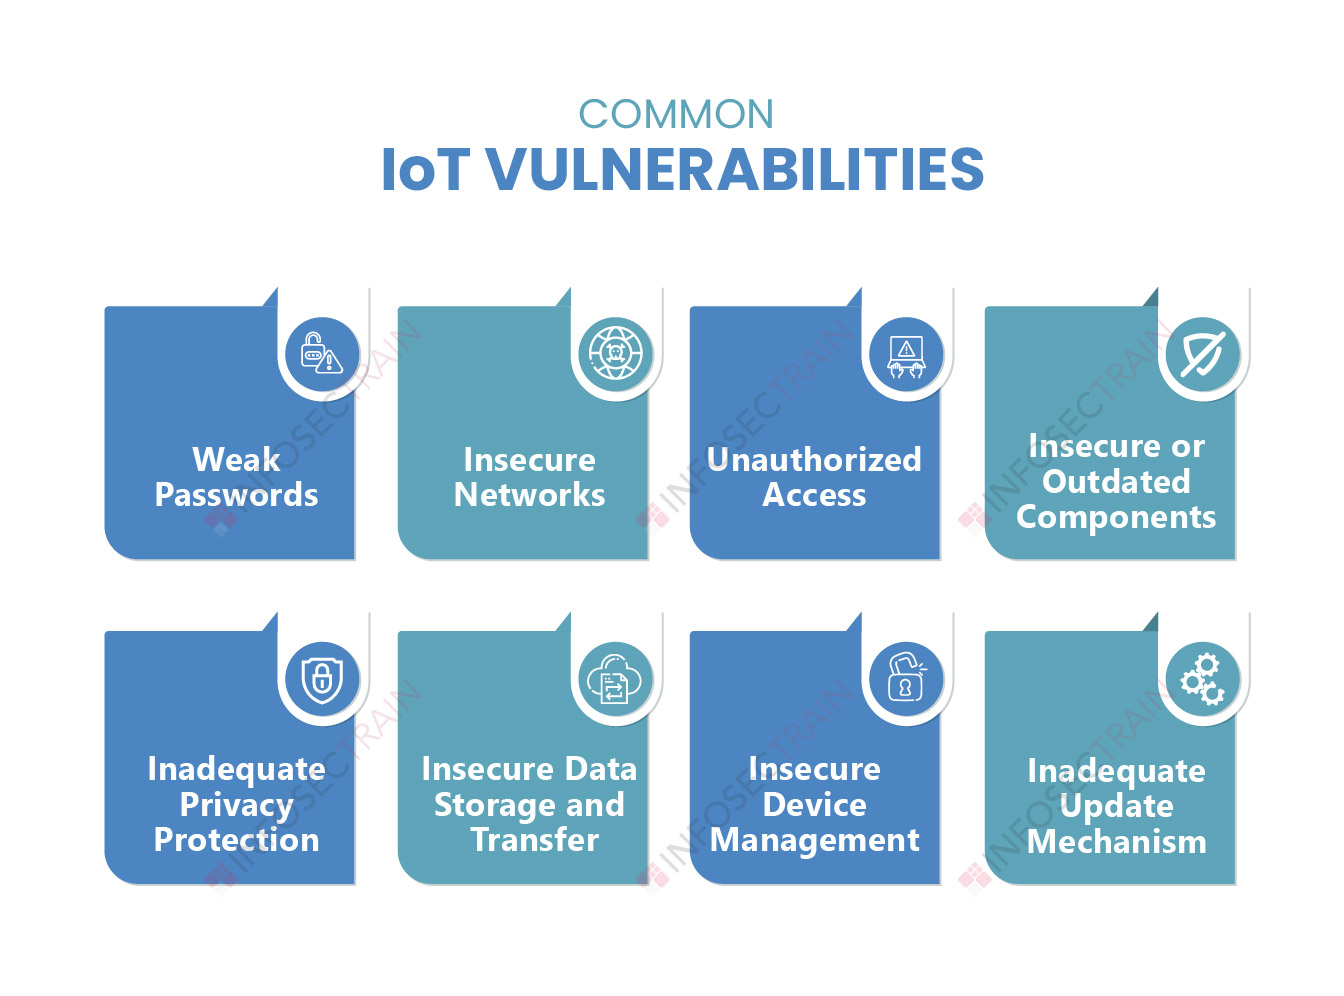 Common IoT vulnerabilities